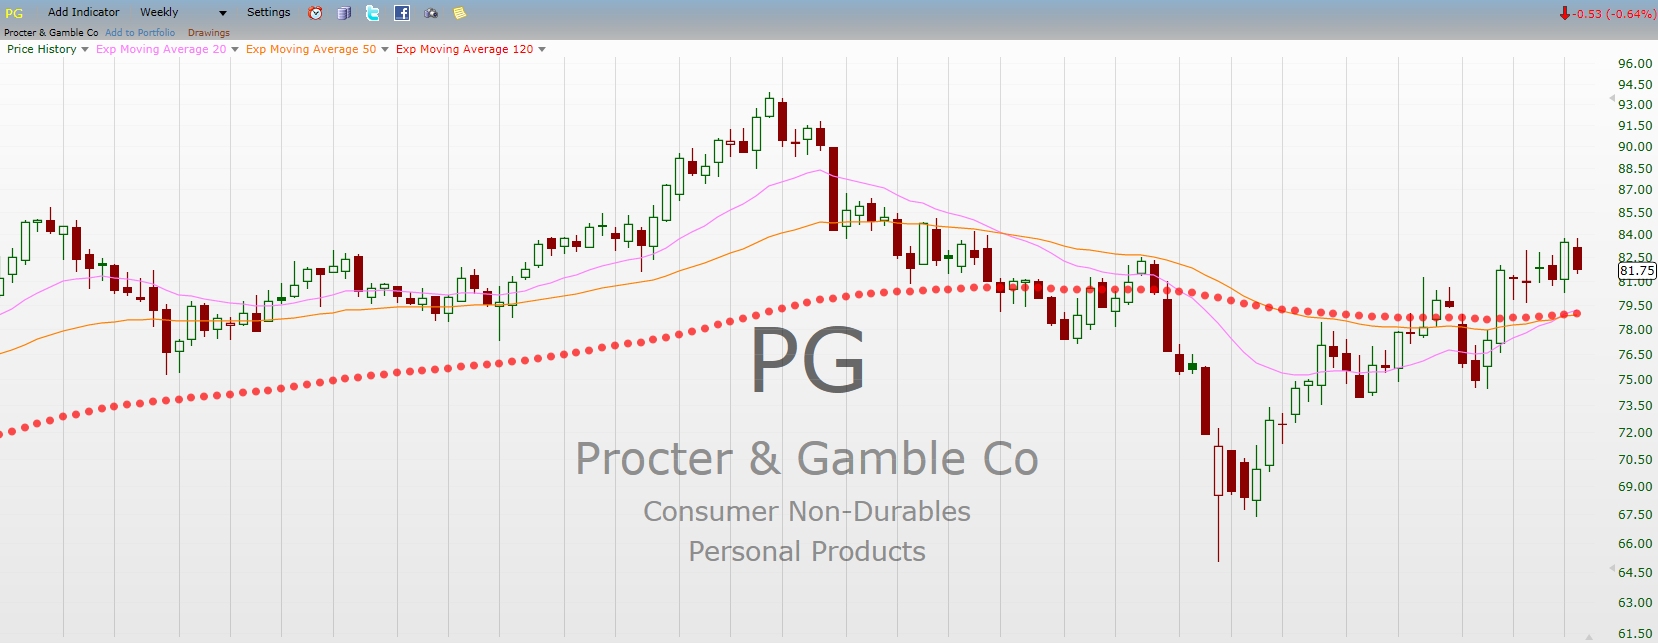 PG_StockPrice.jpg